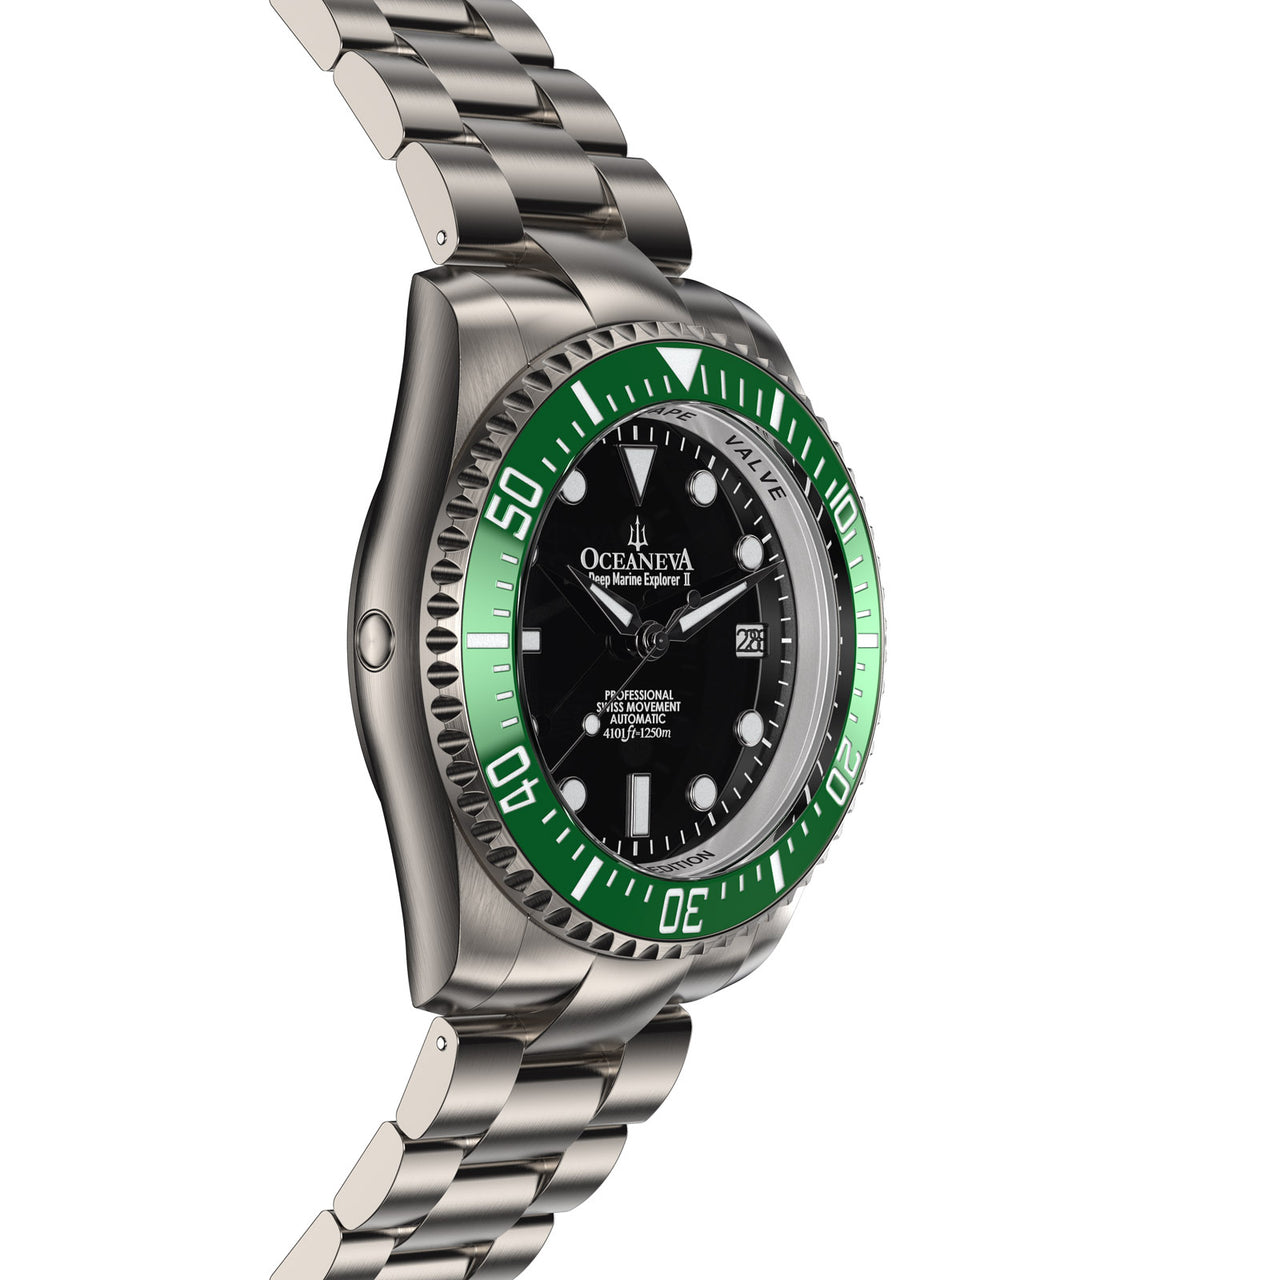 Oceaneva™ Men's Deep Marine Explorer II 1250M Titanium Watch Black and Green